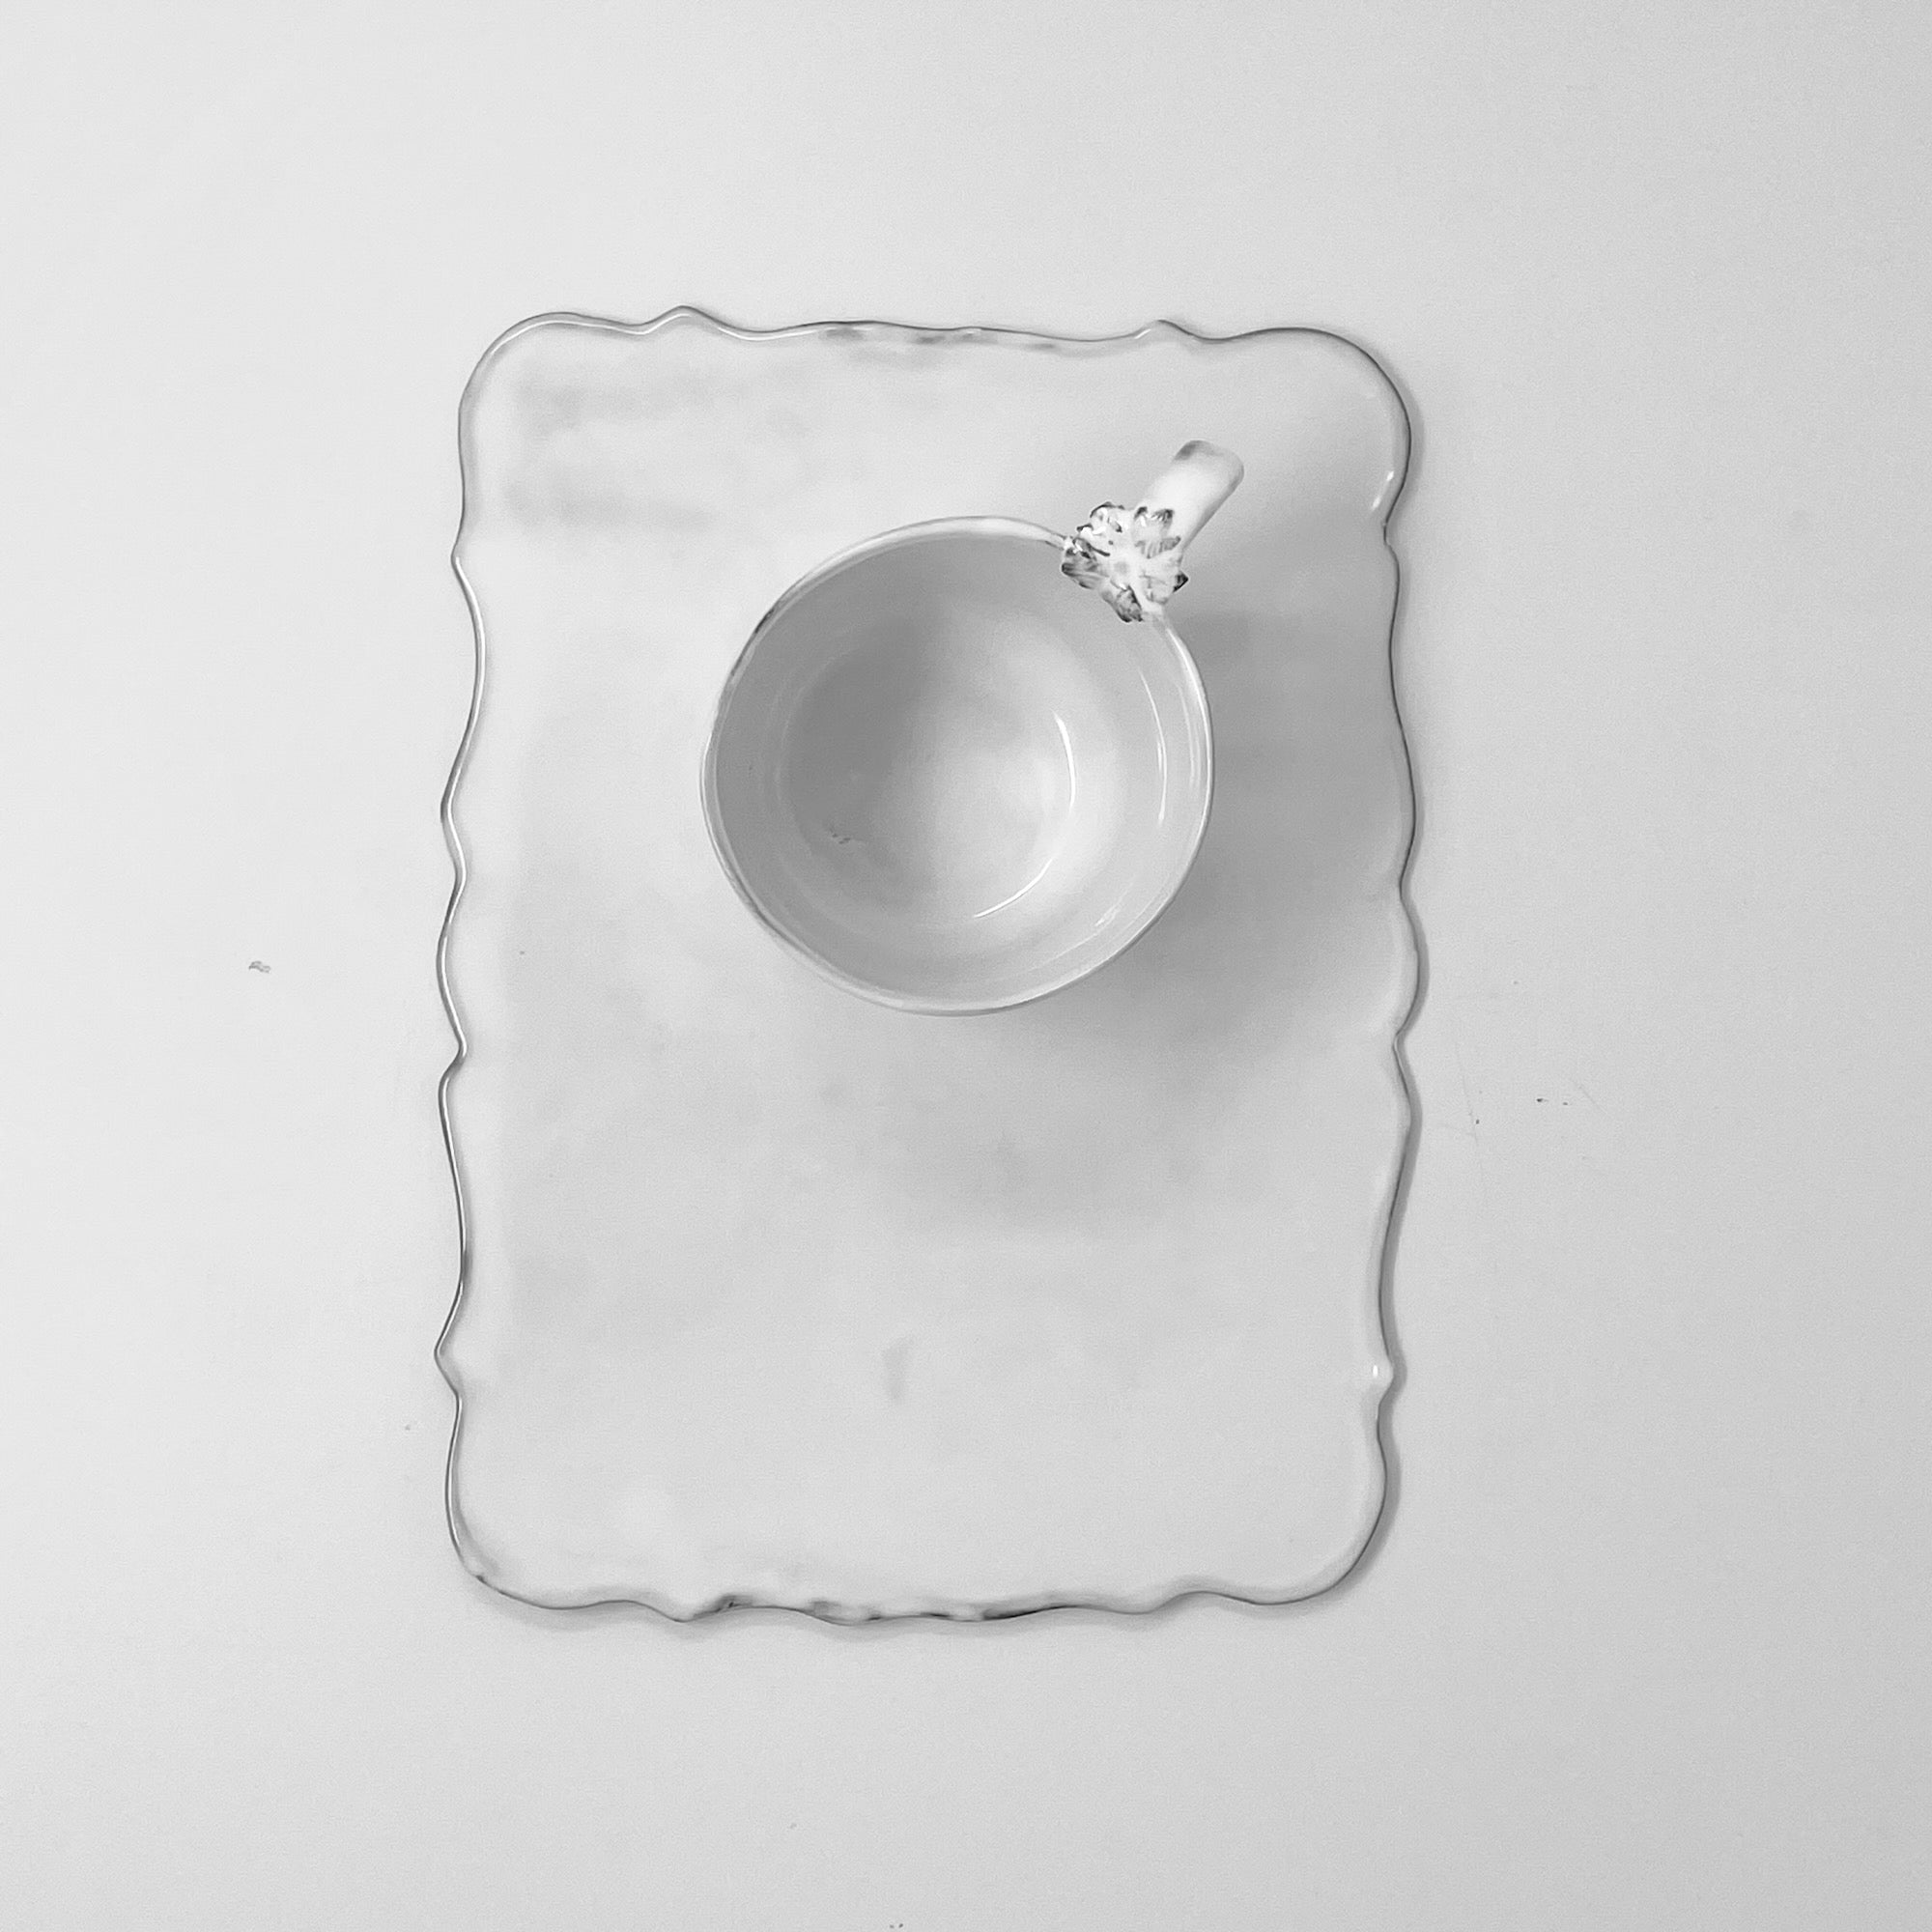 Small mug and rectangular saucer